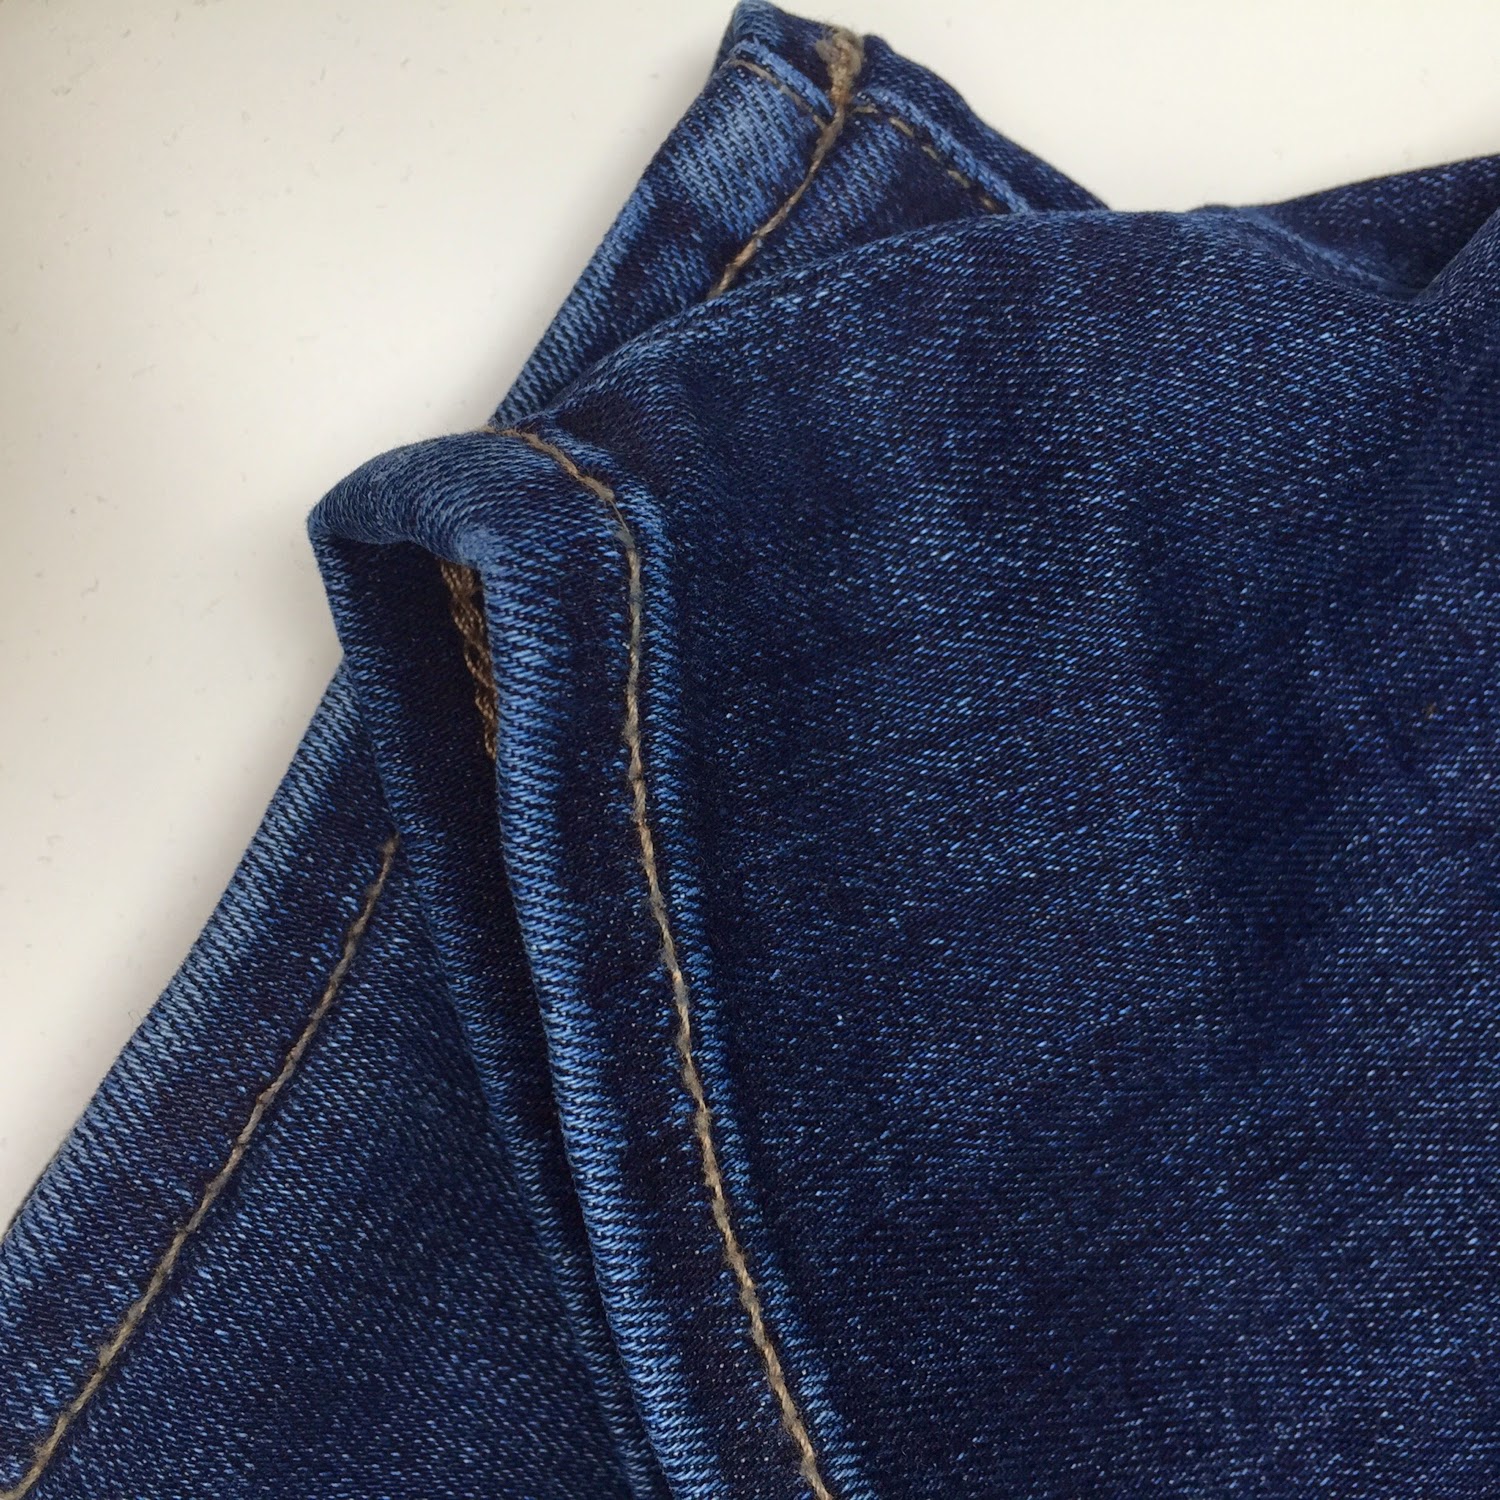 A sneaky way to shorten jeans | Flossie Teacakes | Bloglovin’